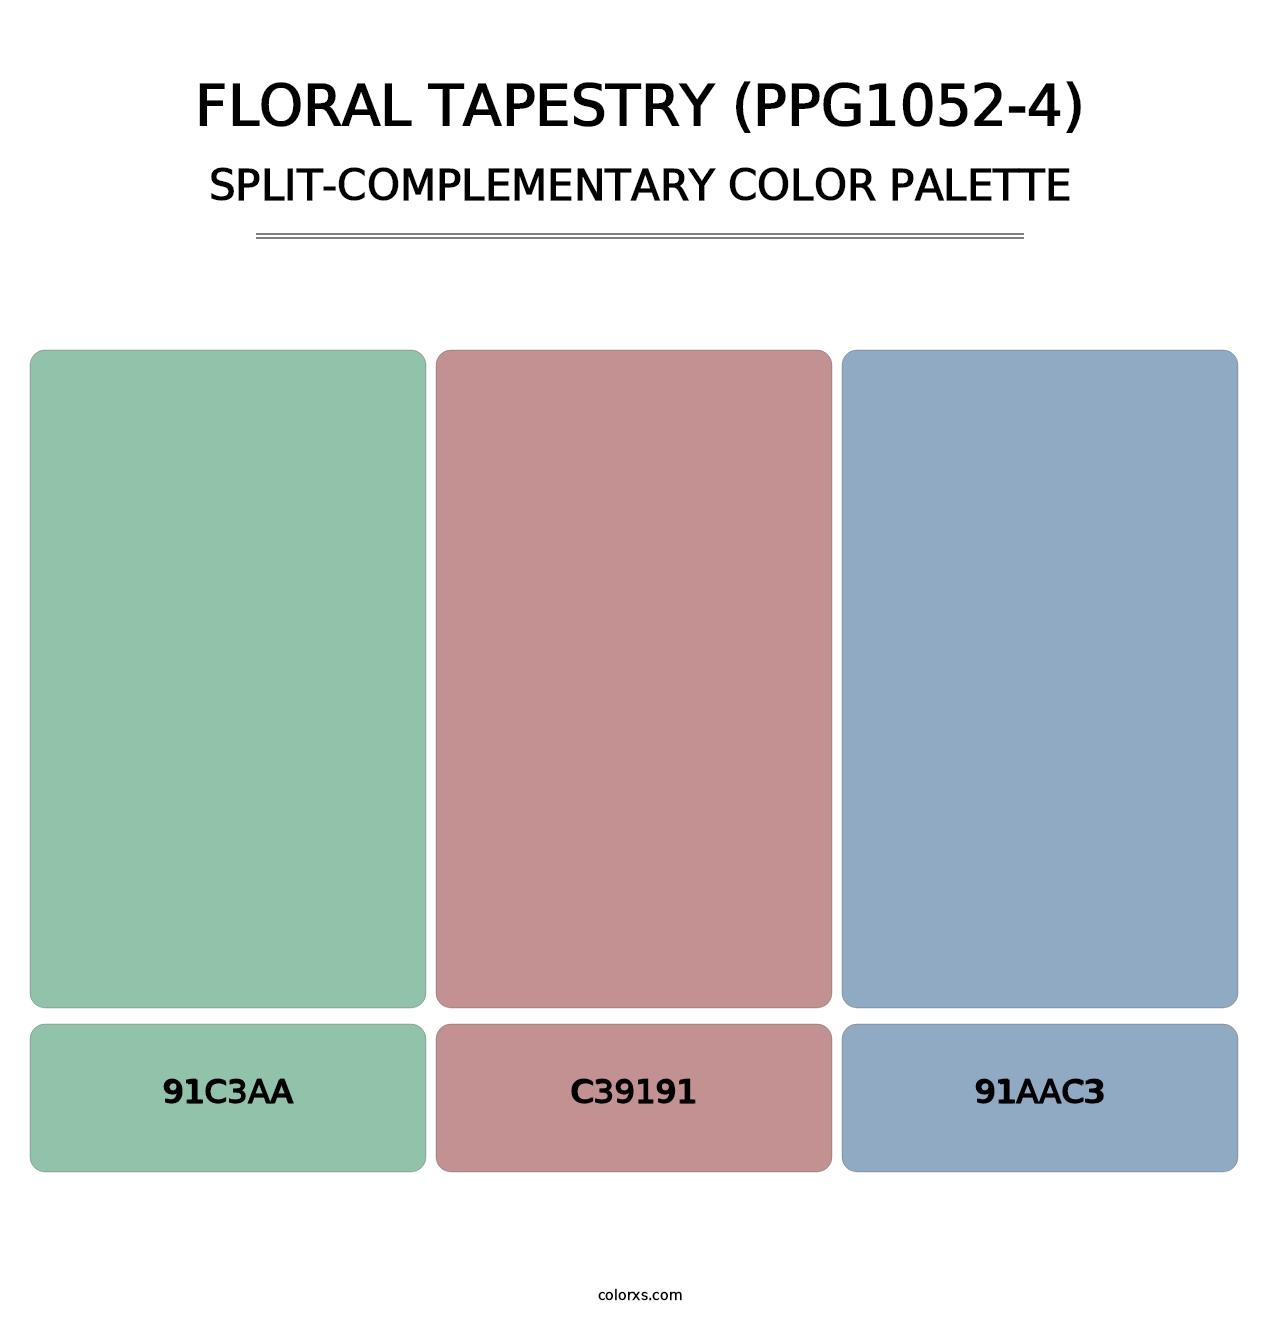 Floral Tapestry (PPG1052-4) - Split-Complementary Color Palette